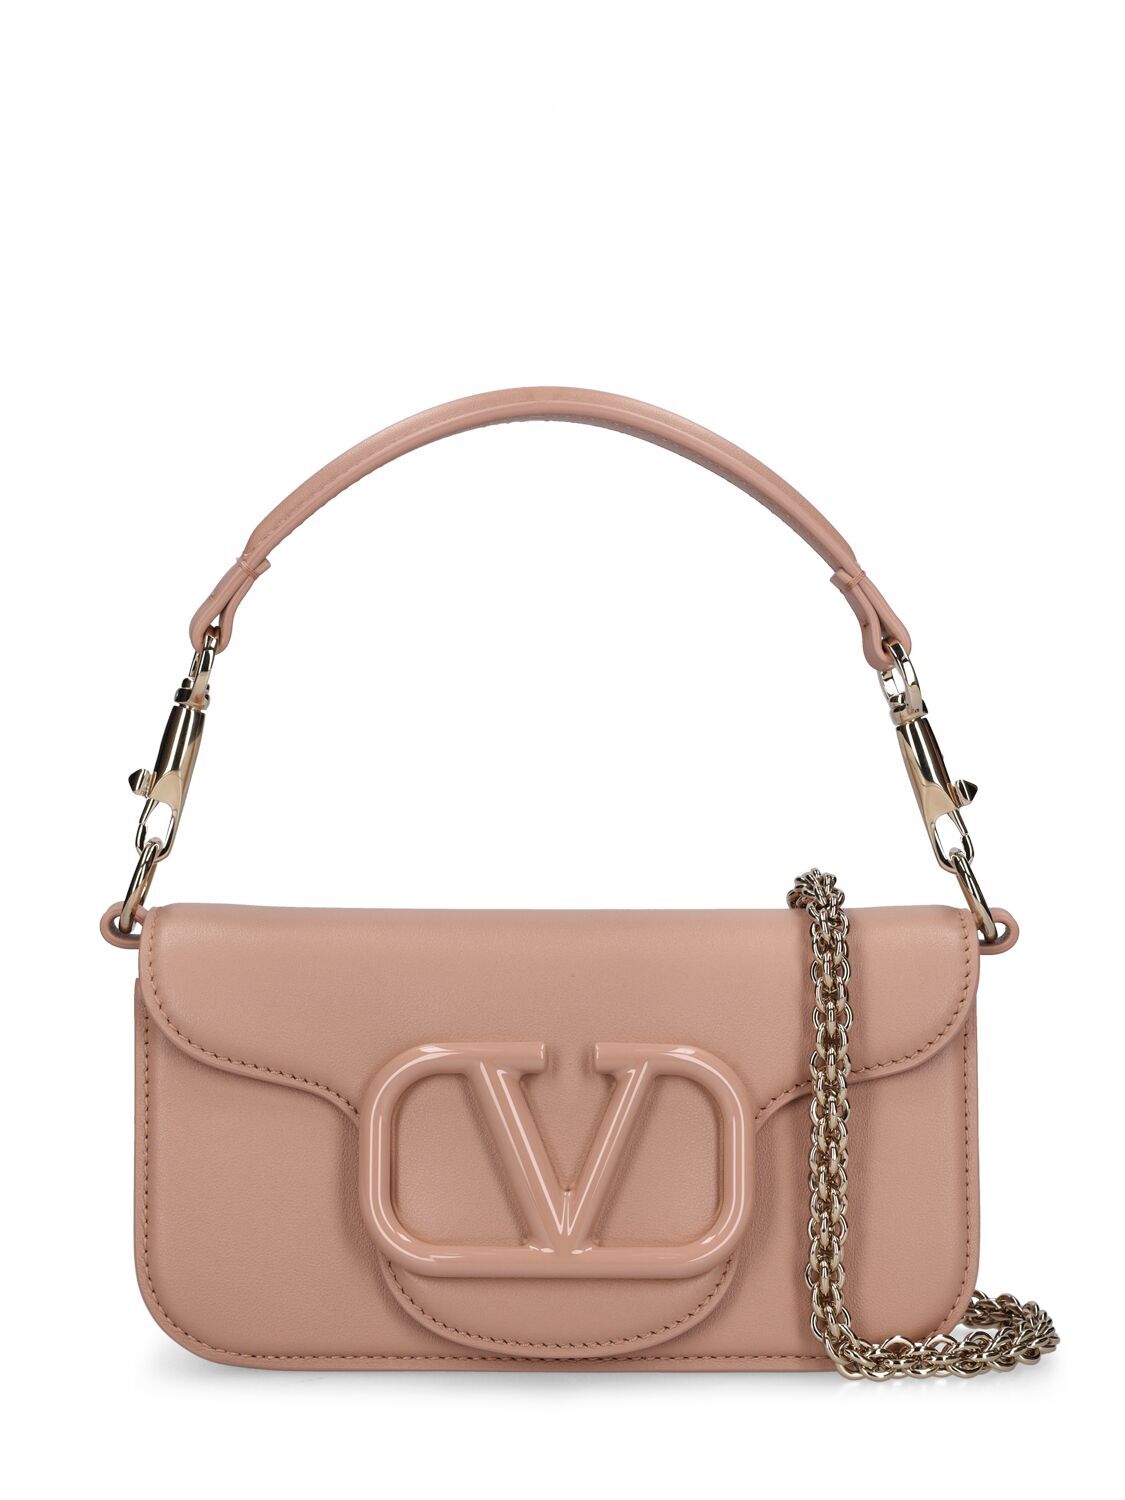 VALENTINO GARAVANI Small Locò Leather Top Handle Bag in rose